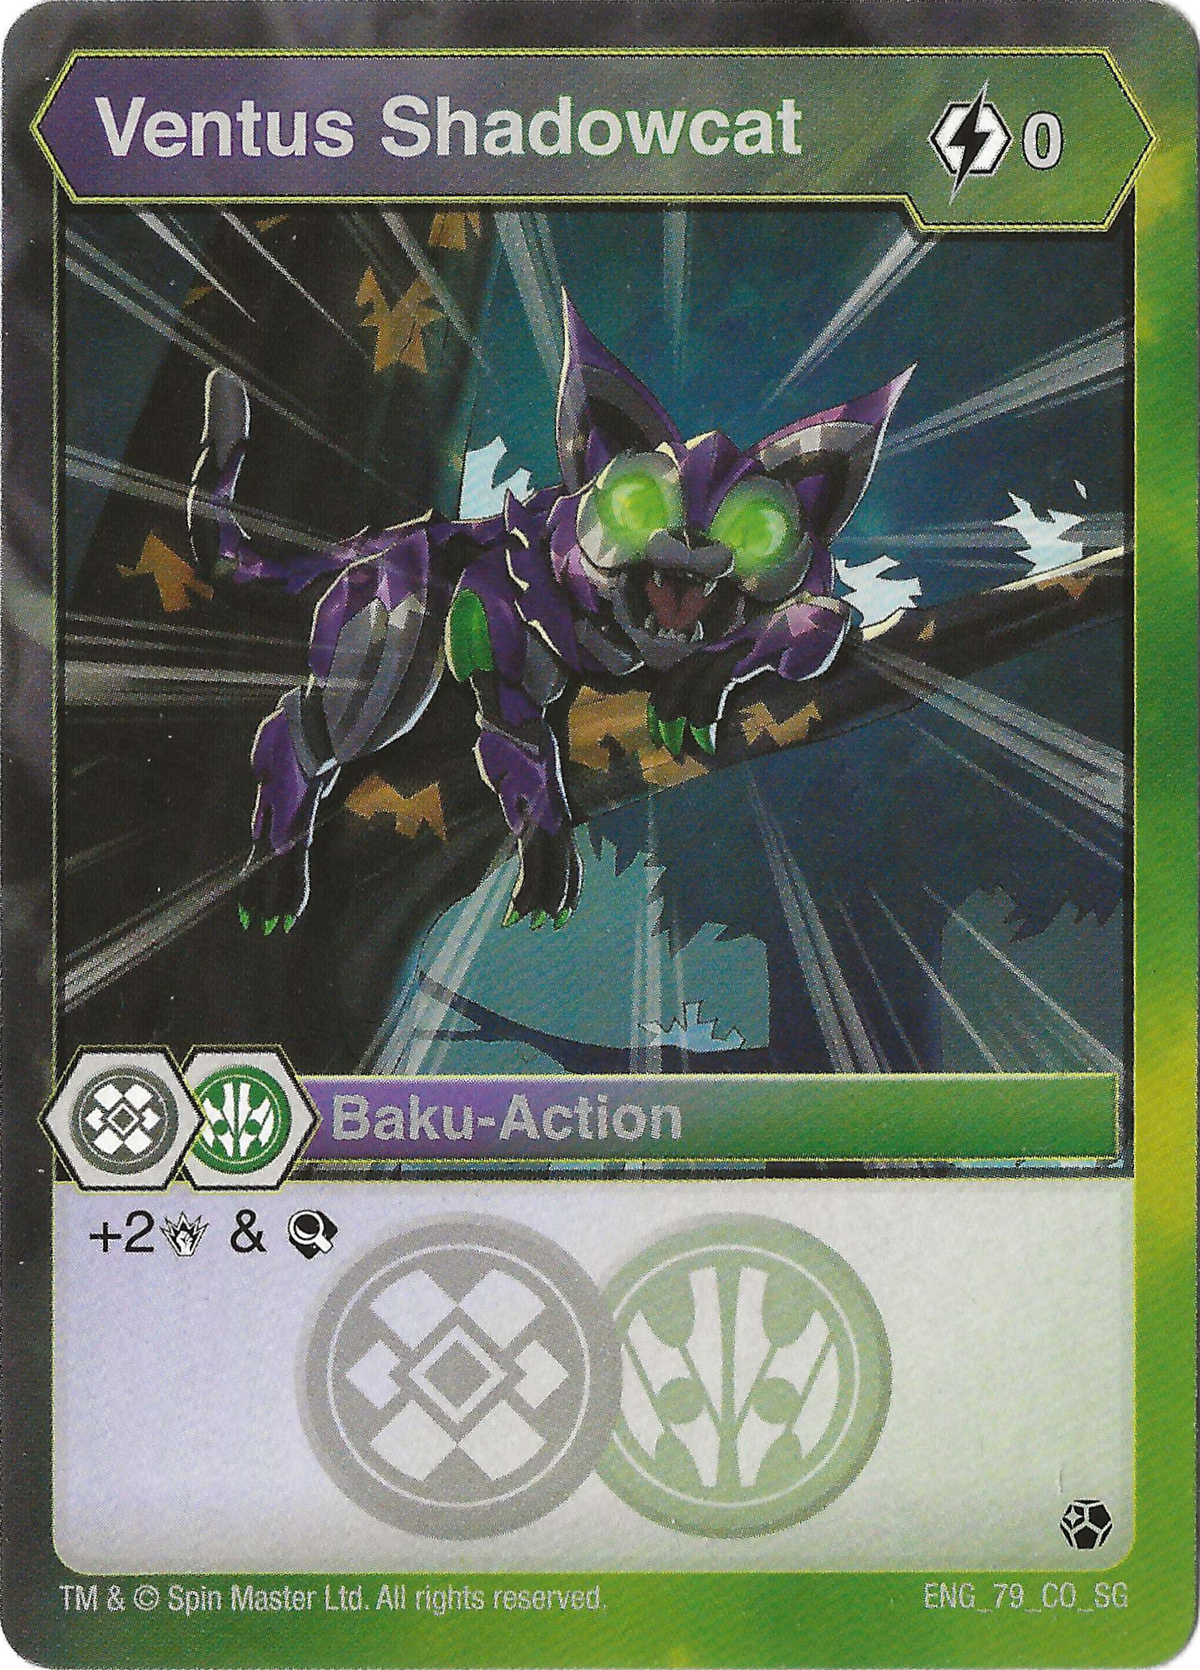 Lightning (Card), Bakugan Wiki